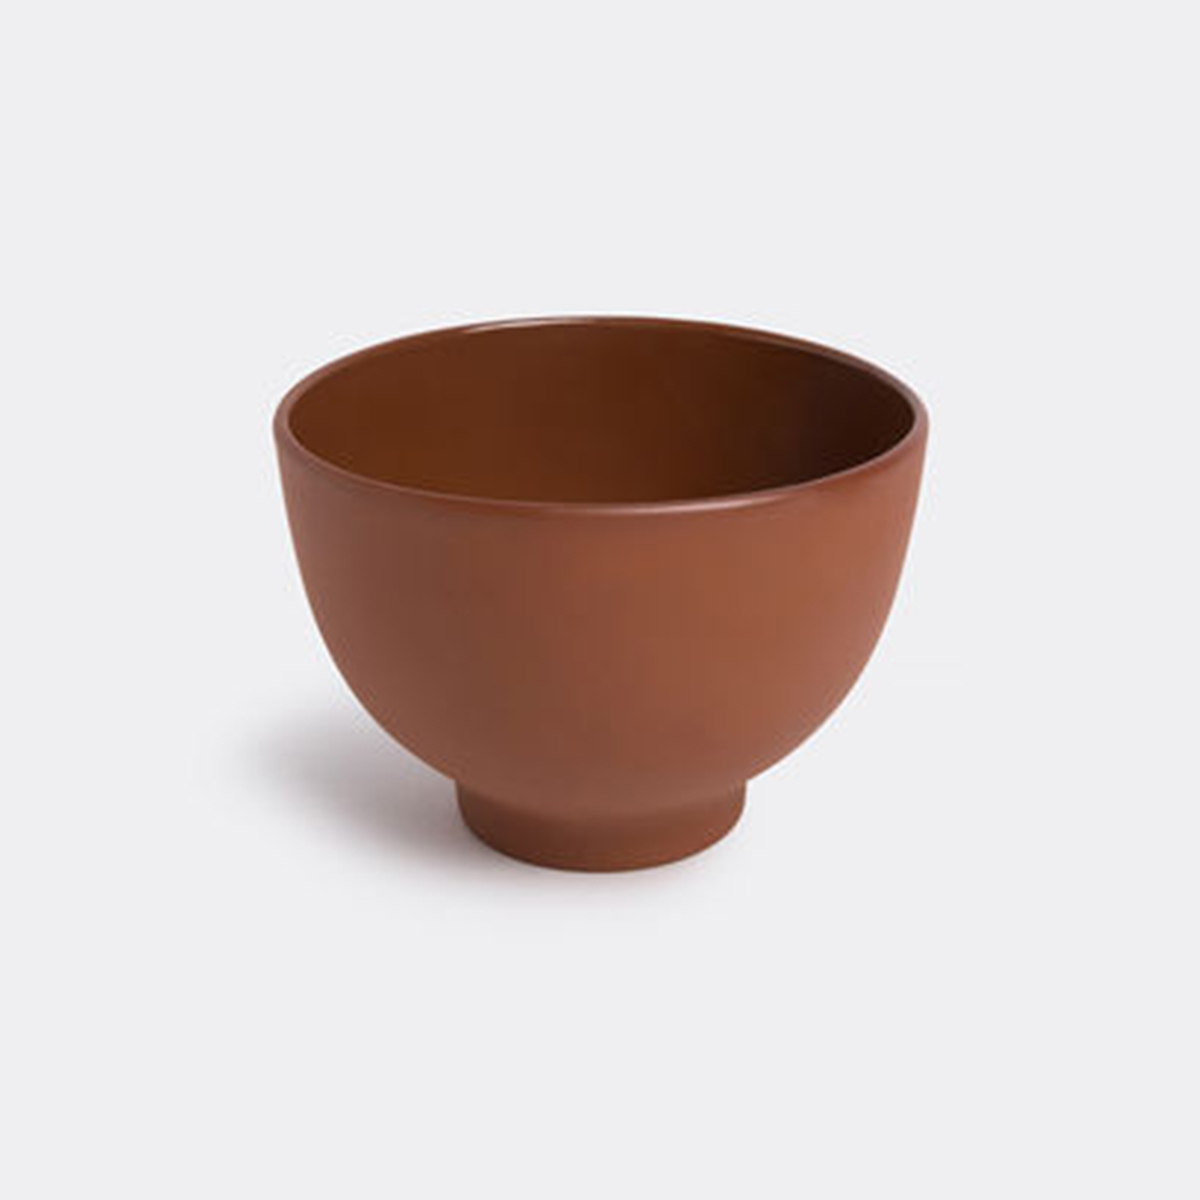 Terracotta Serving Bowl